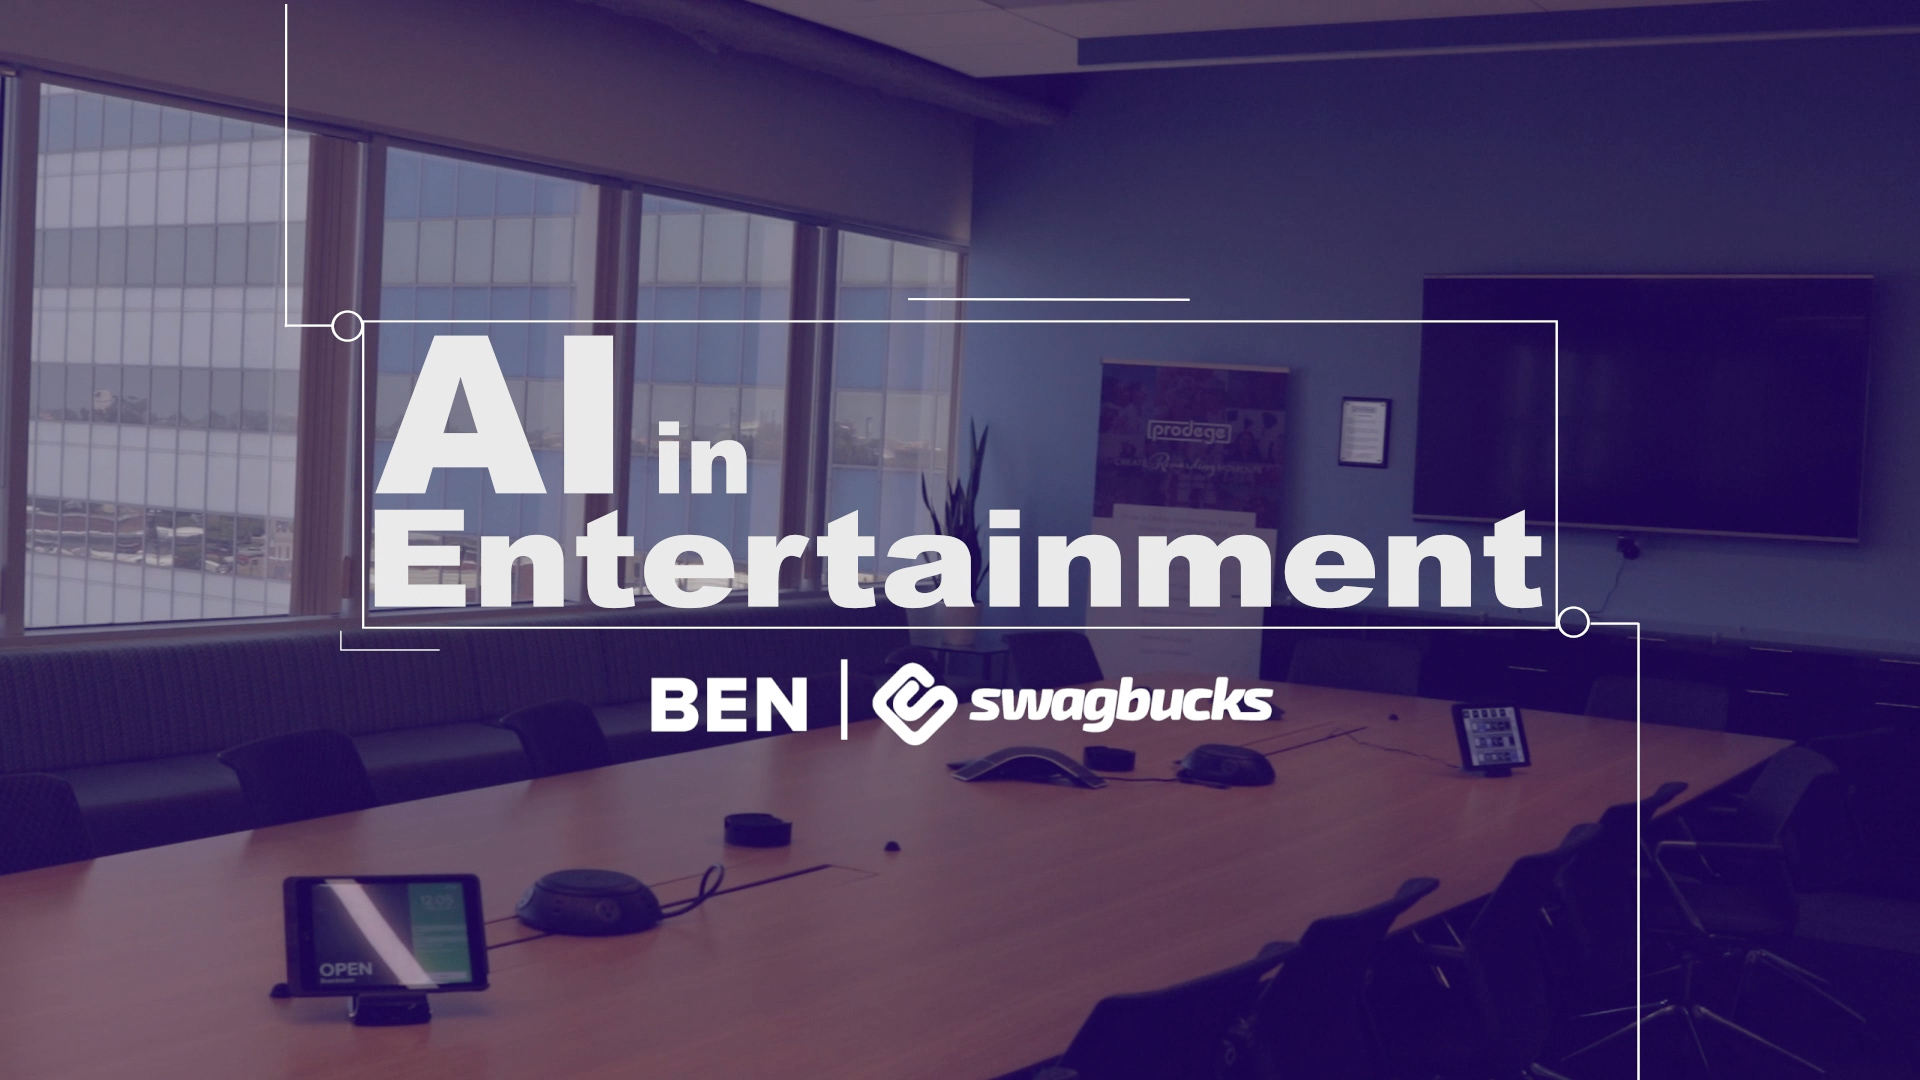 Swagbucks / A.I. in Entertainment